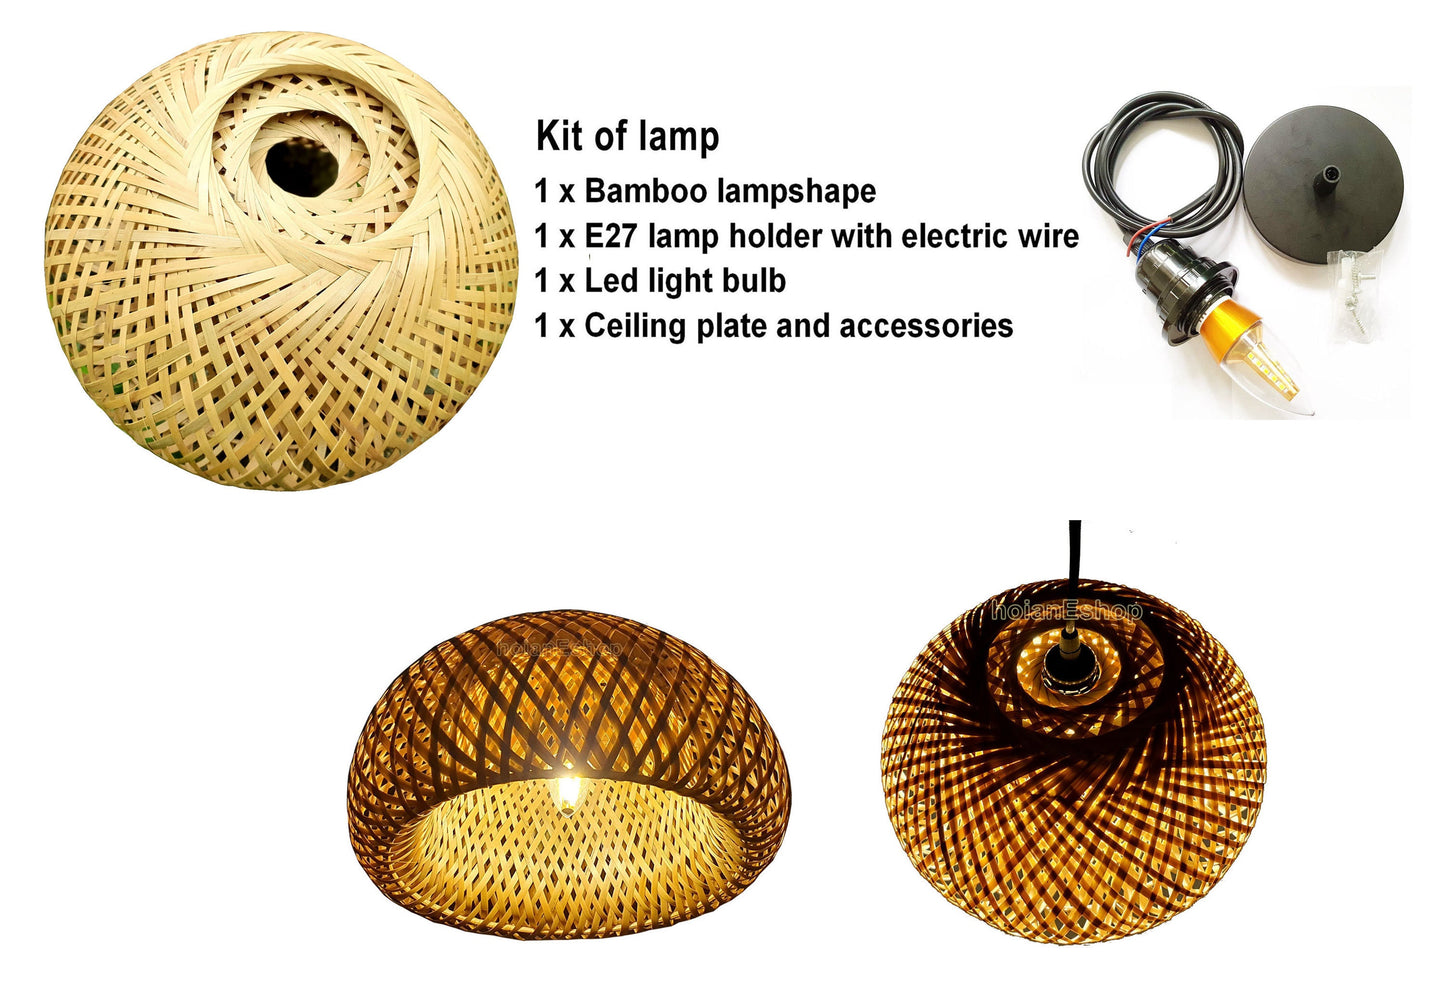 Bamboo Lamps Bamboo Ceiling Light For Living Room Decor Kitchen Decor Bedroom Decor Bamboo Pendant Light Pendant Lamps Bamboo Lampshade